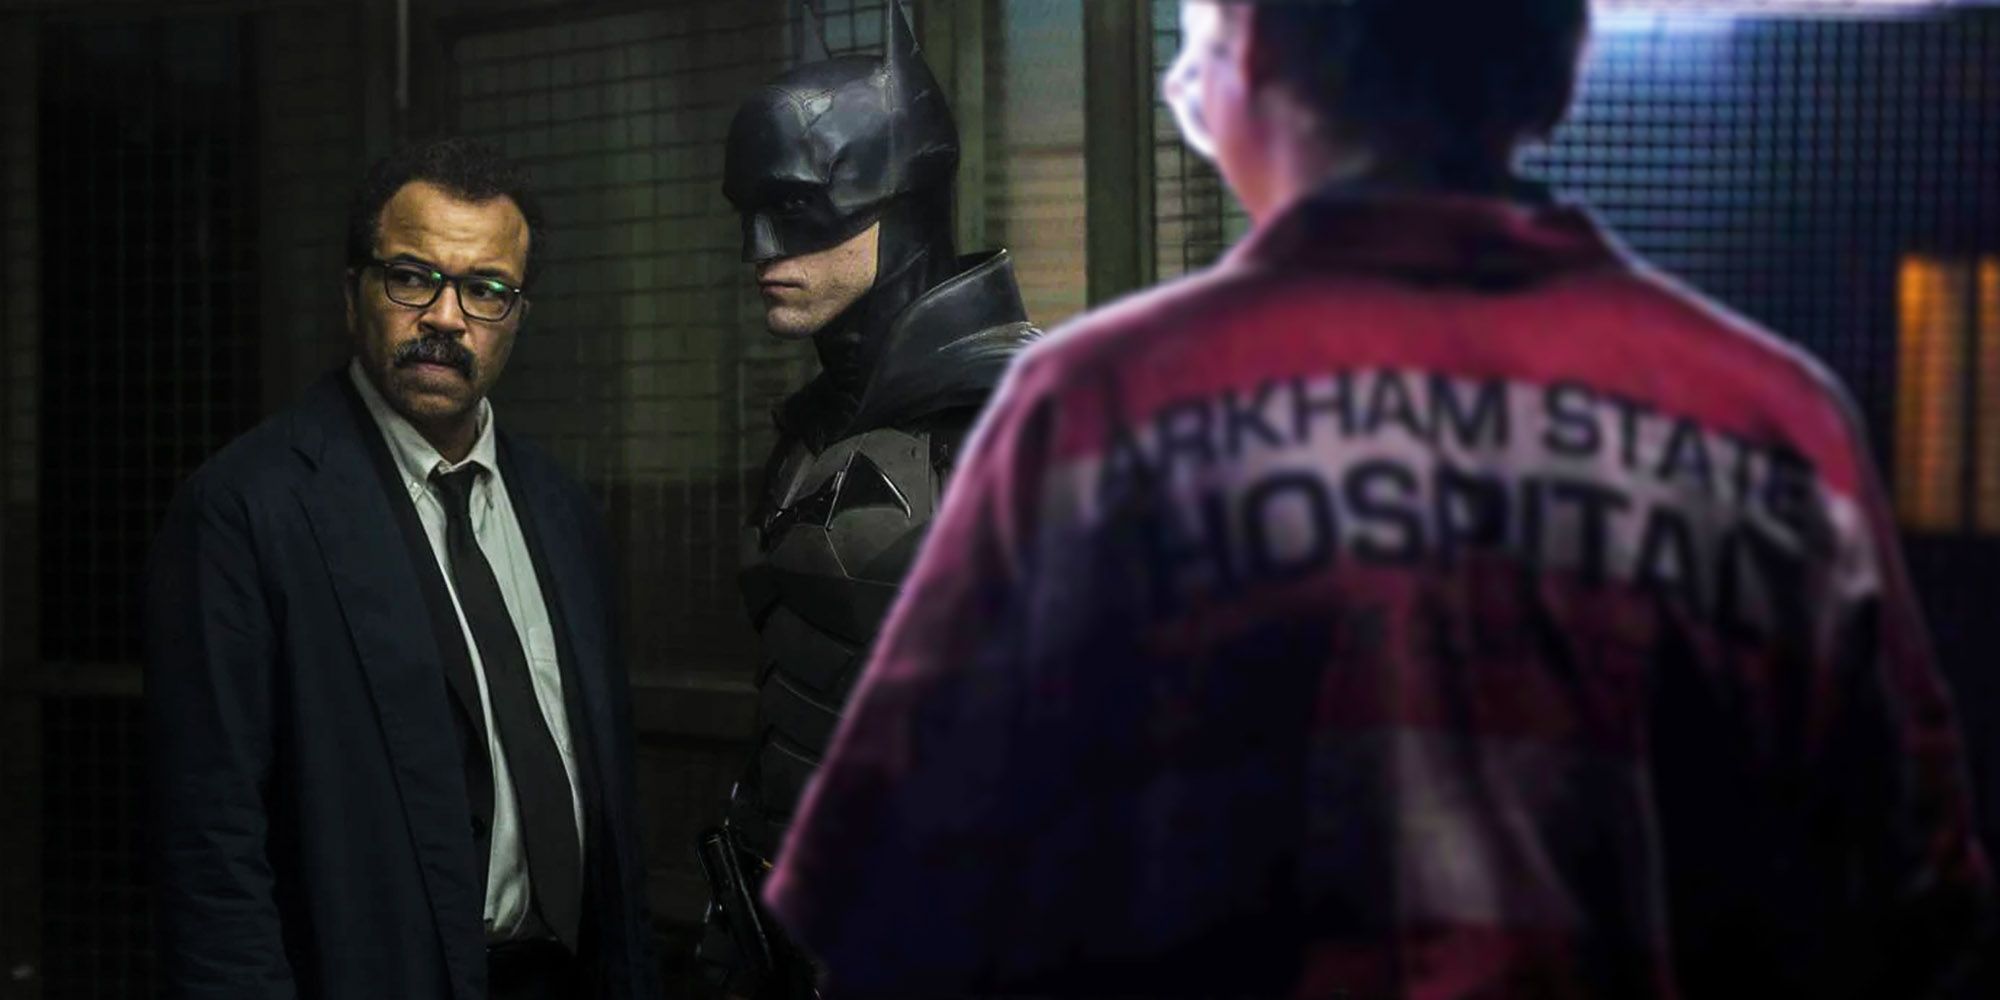 The batman spoilers confirmed about arkham prisoner joker